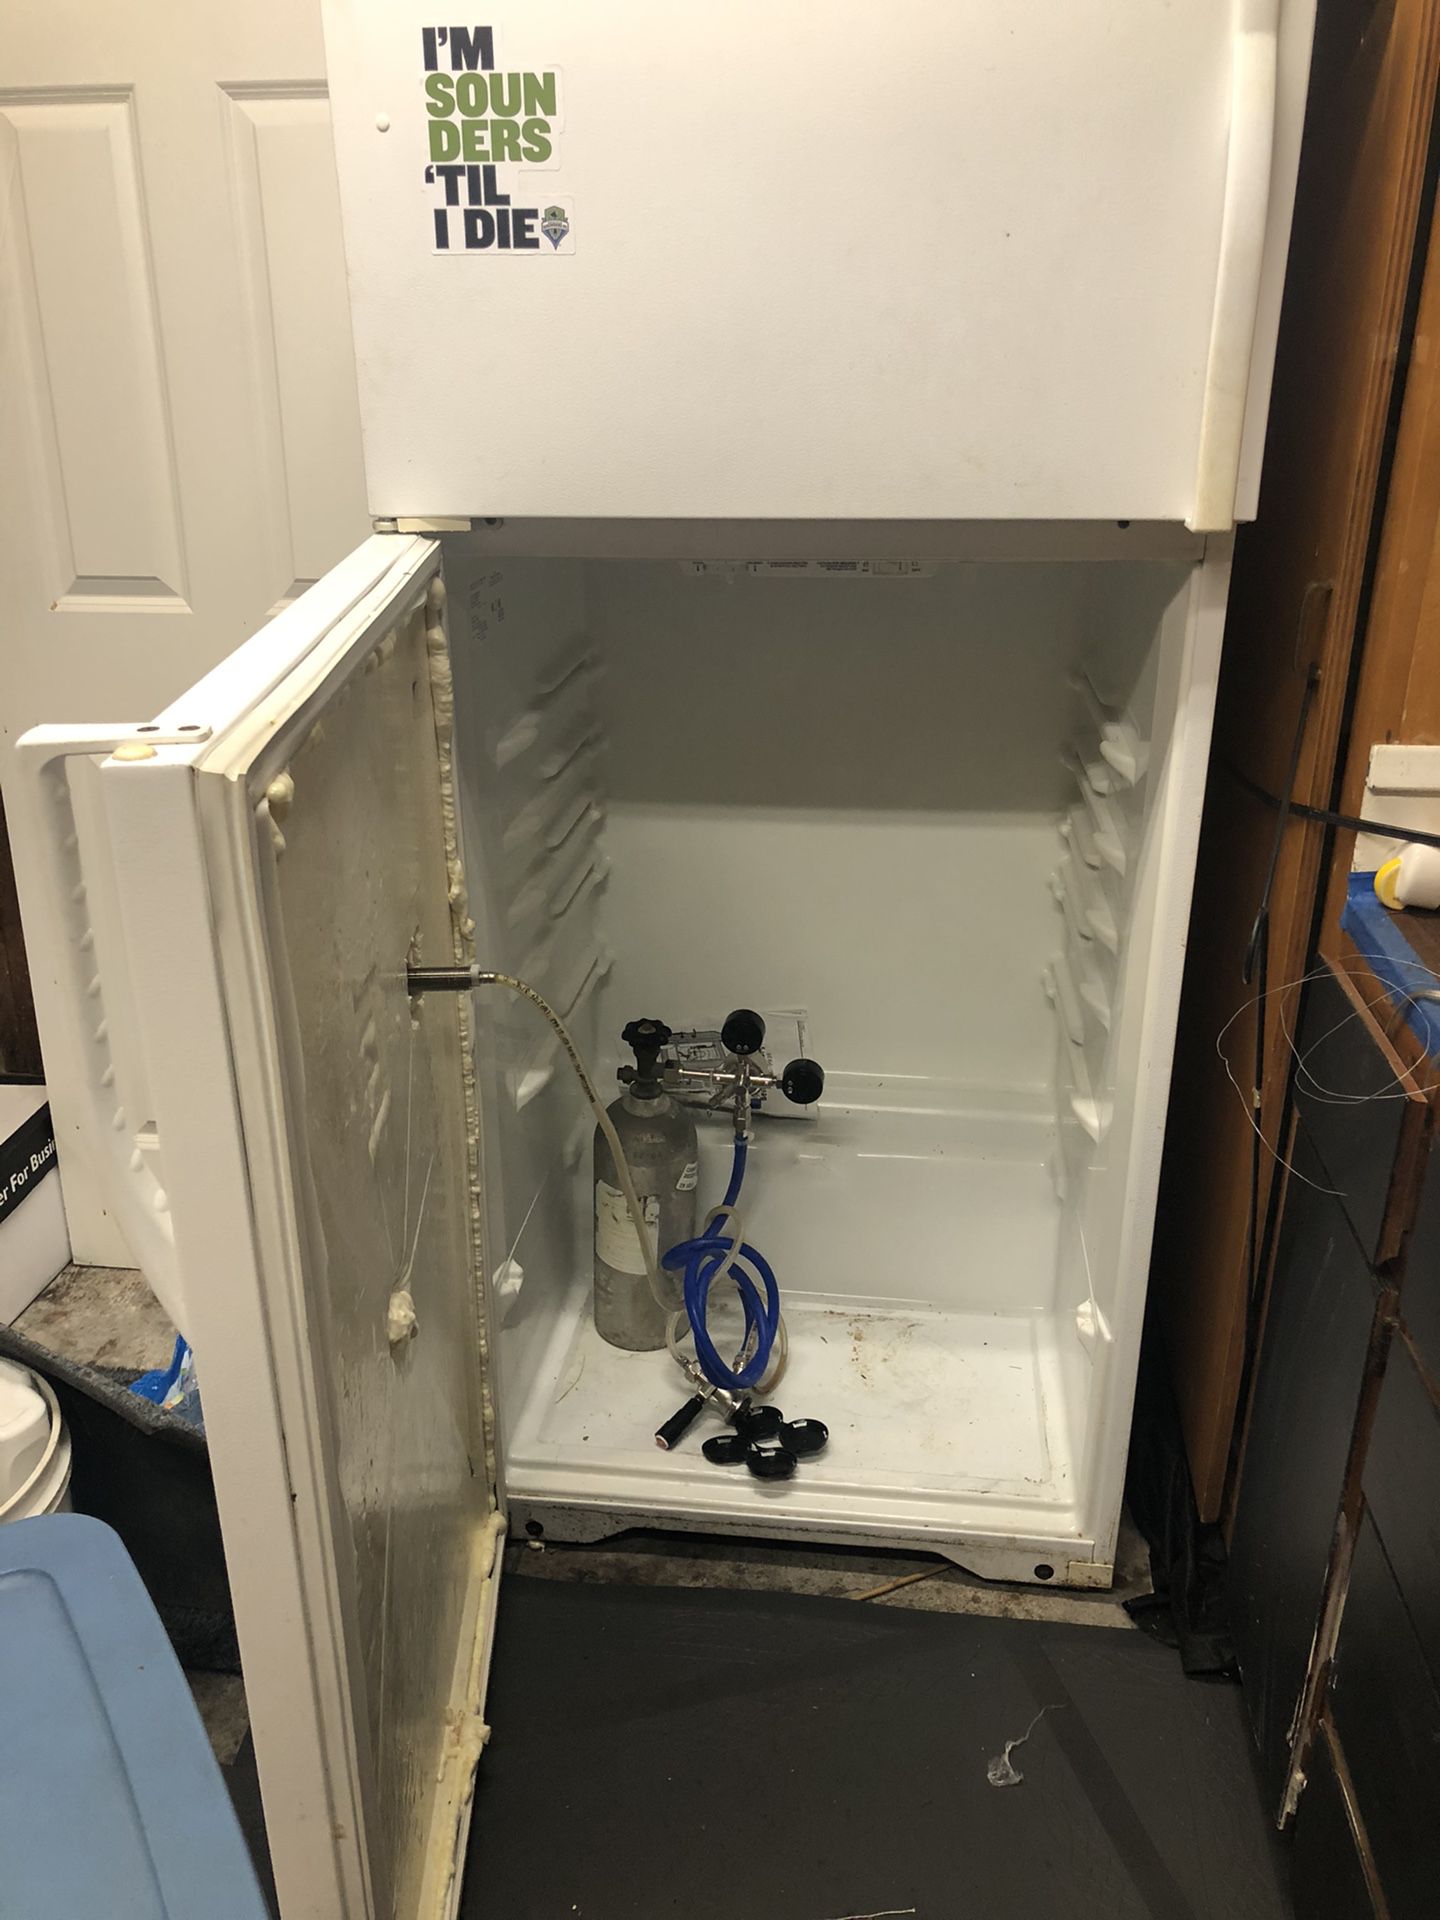 Home made kegerator and garage fridge/freezer - make an offer